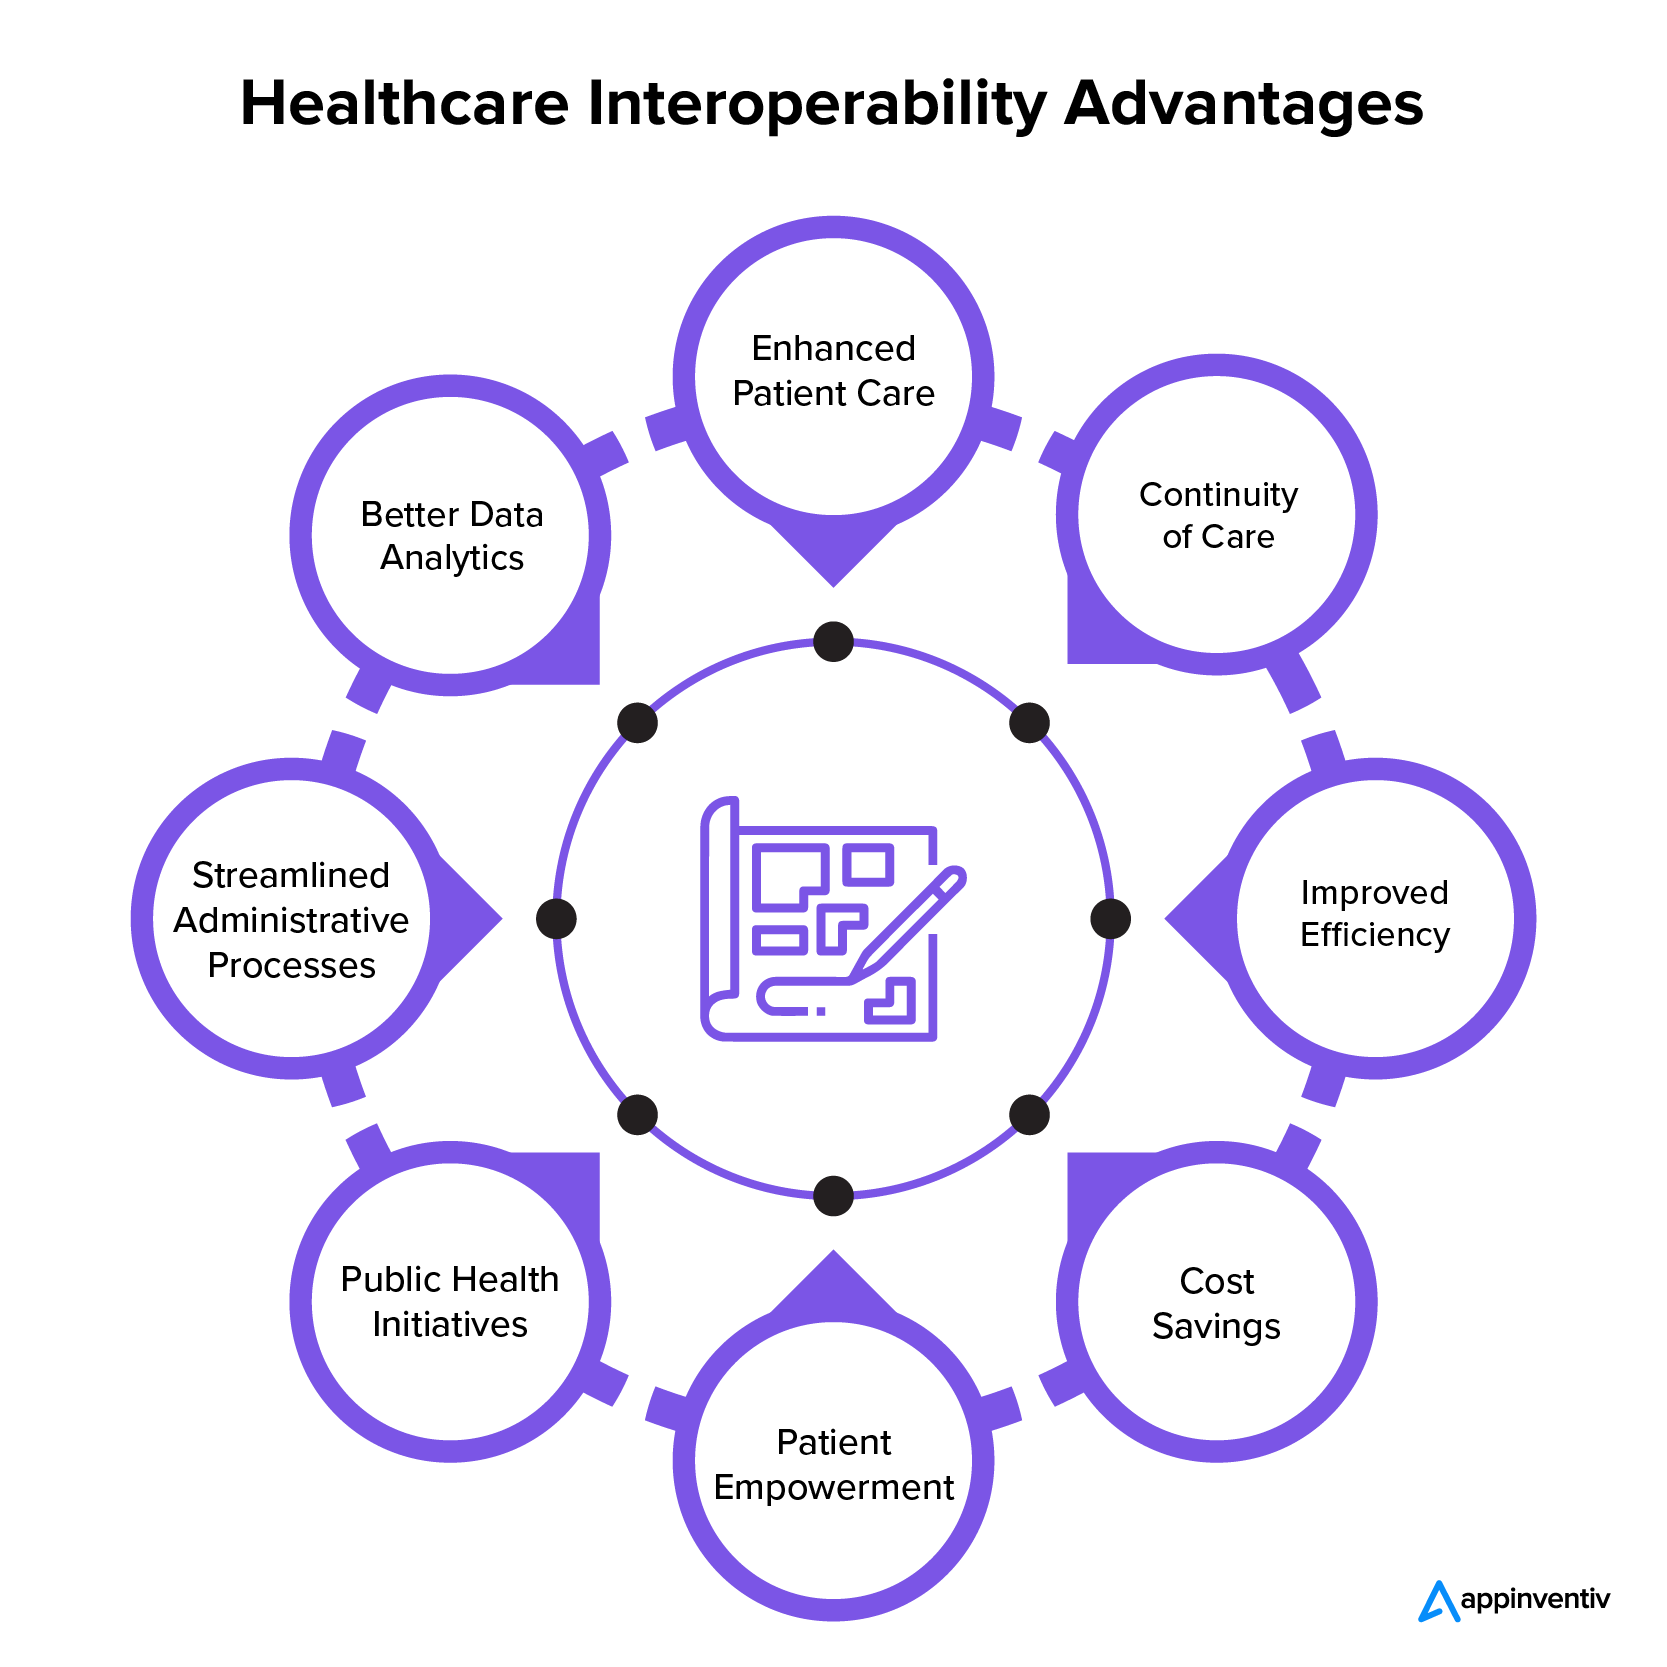 Healthcare interoperability advantages